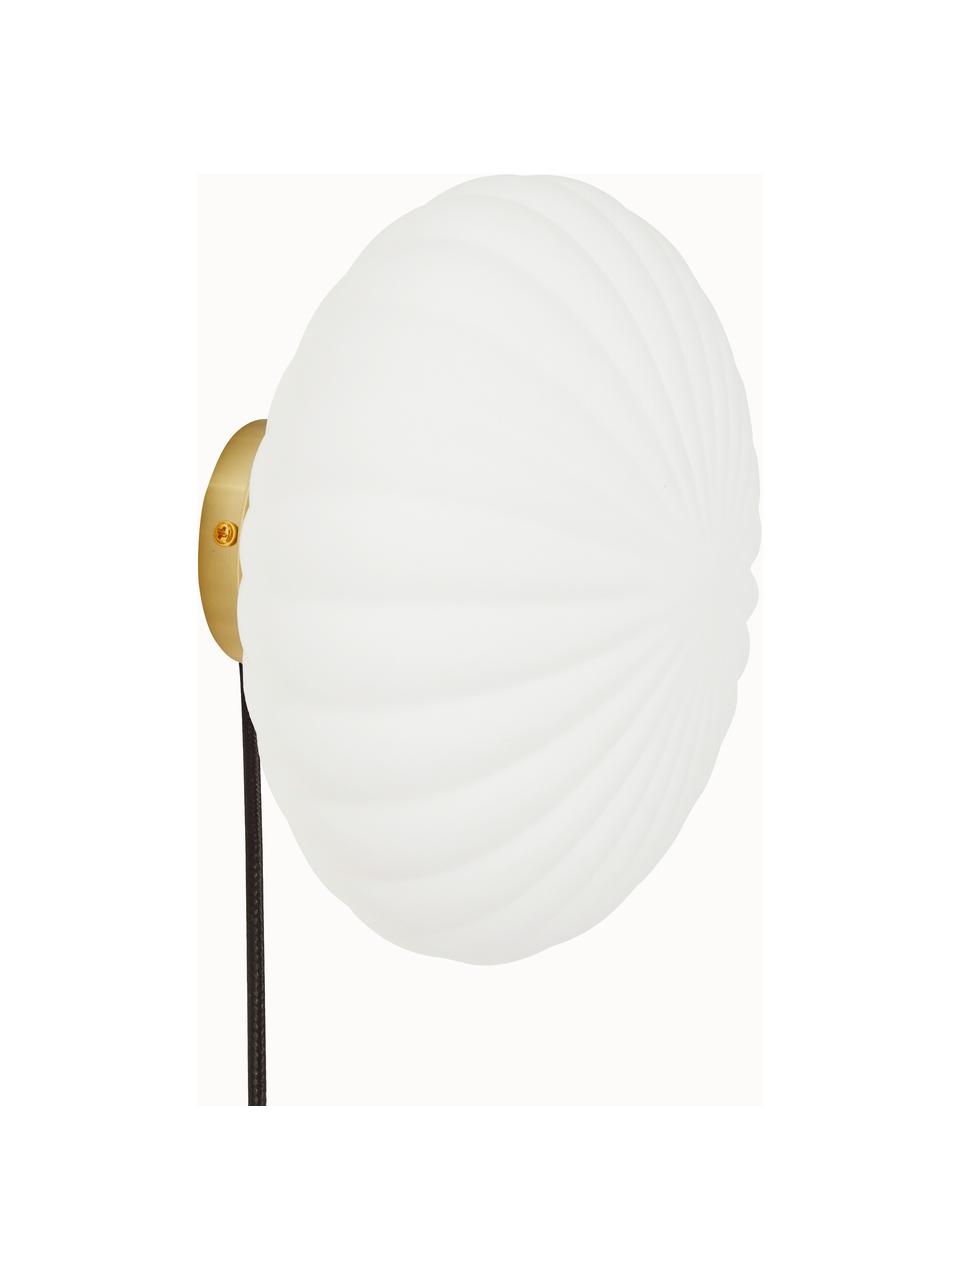 Handgemaakte wandlamp Kumu, verschillende formaten, Lampenkap: glas, Wit, goudkleurig, Ø 25 x H 15 cm